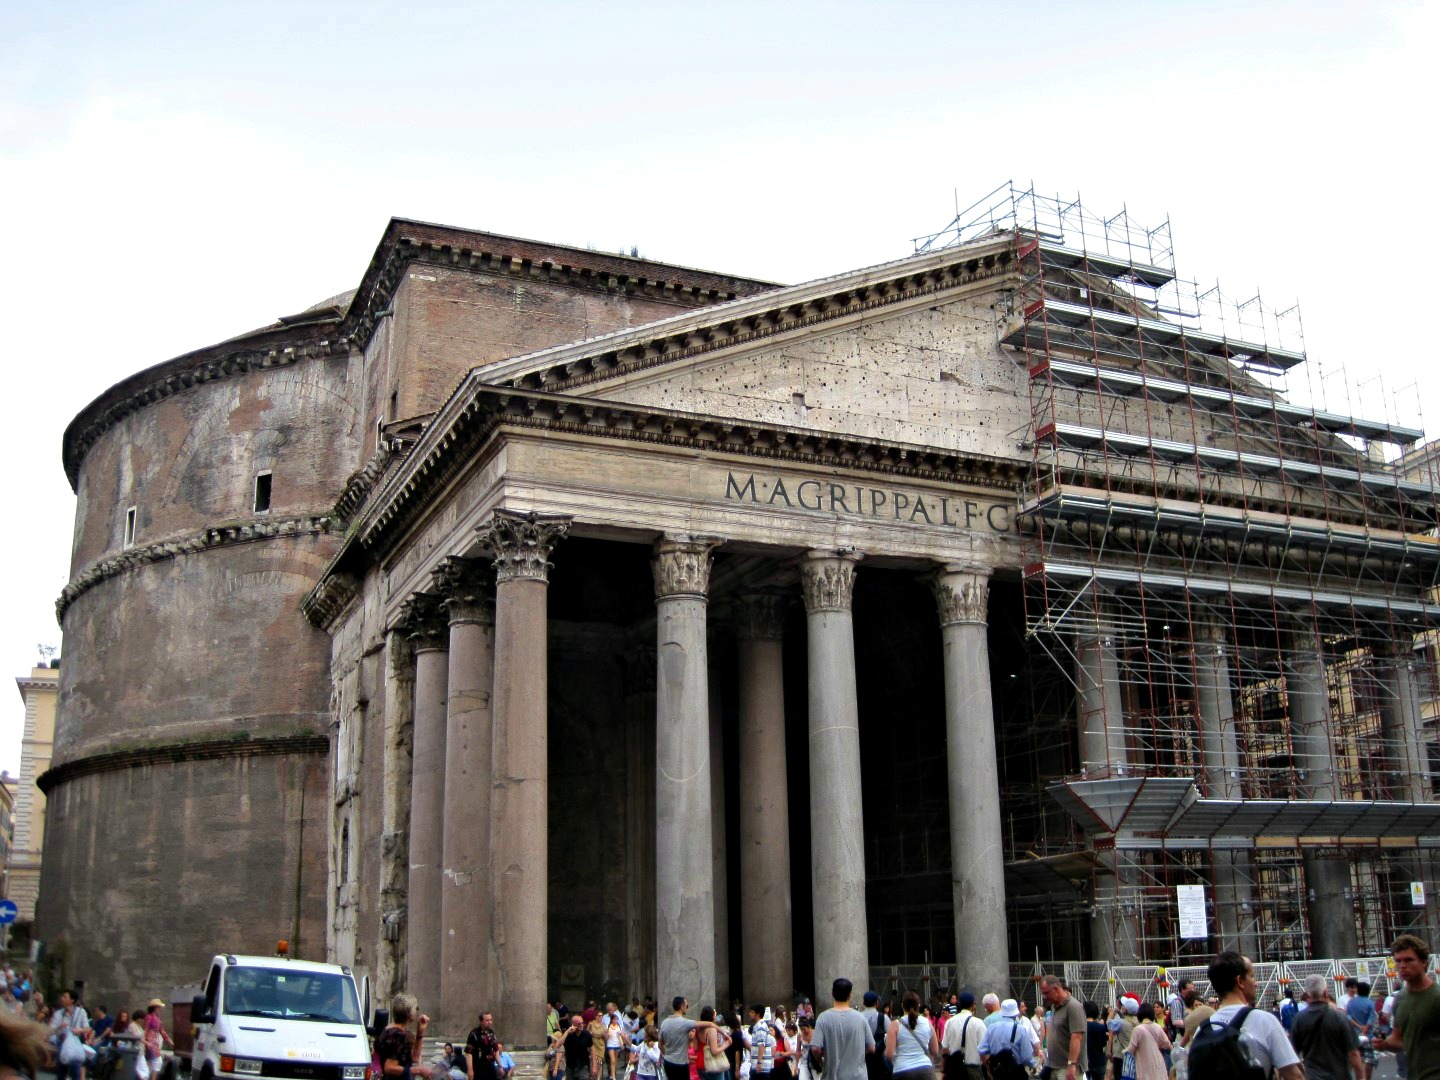 Pantheon under construction